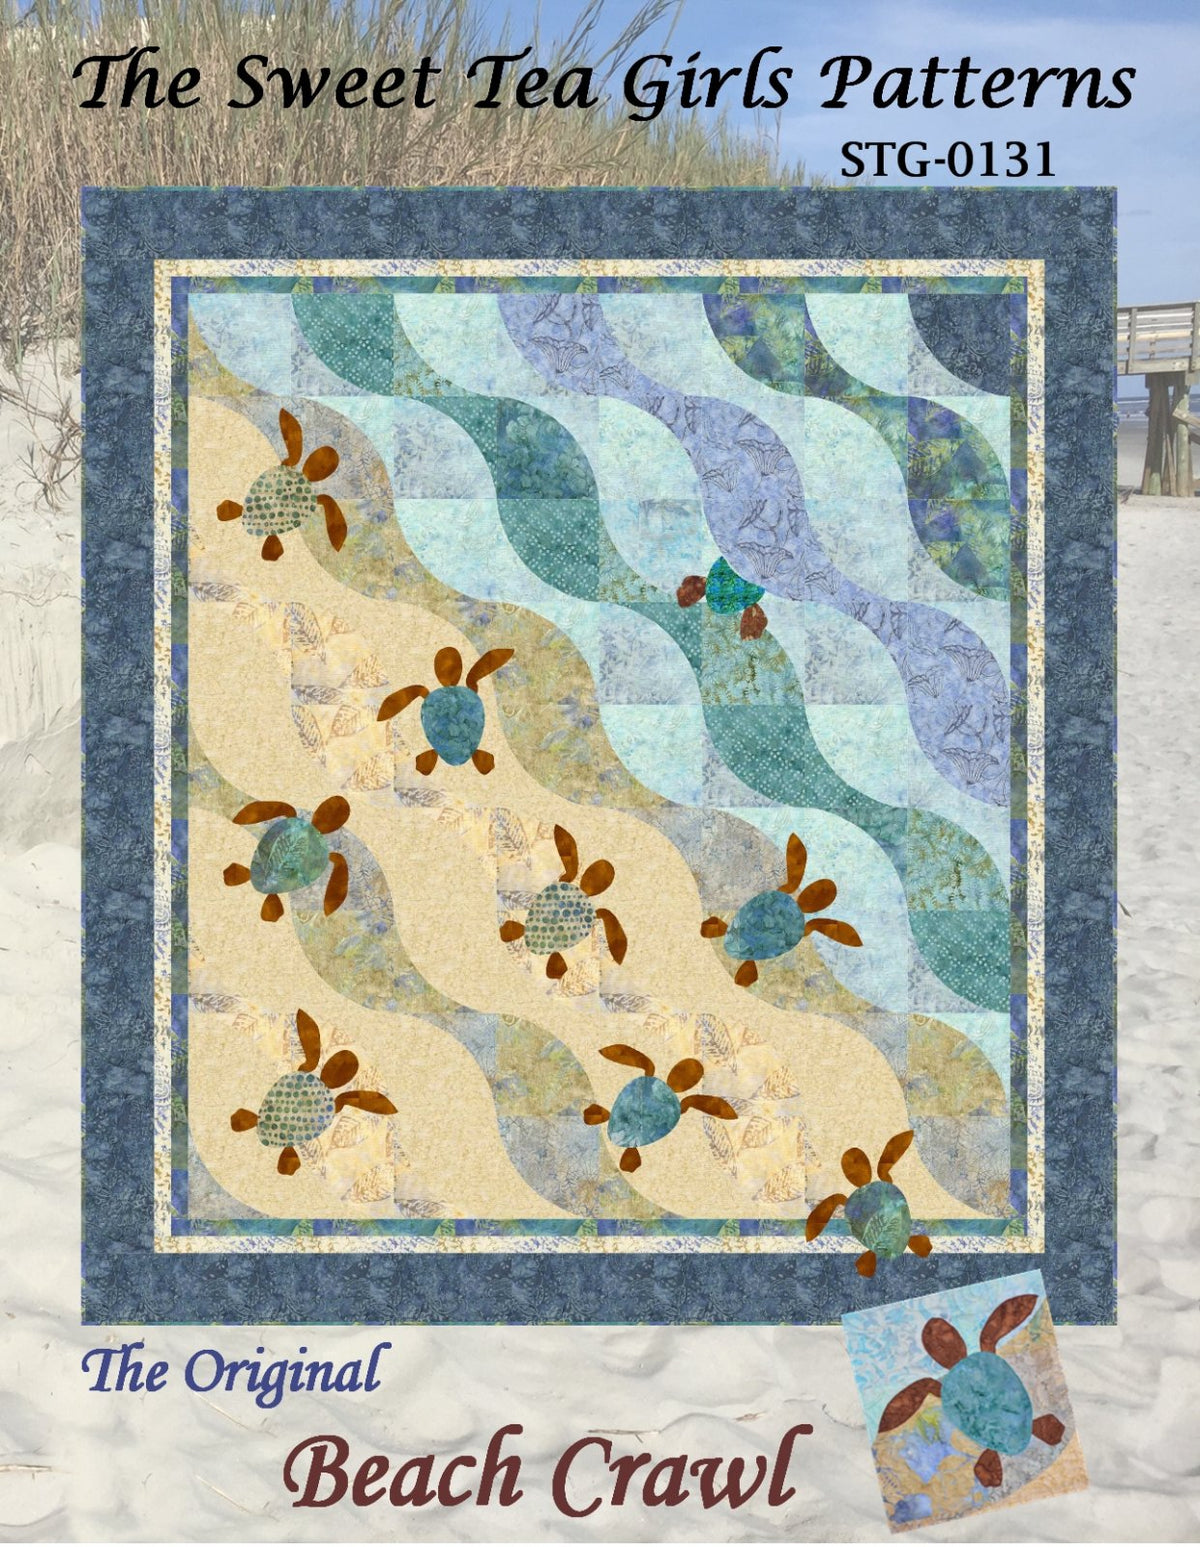 The Original Beach Crawl Quilt Pattern from Sweet Tea Girls - STG-0131